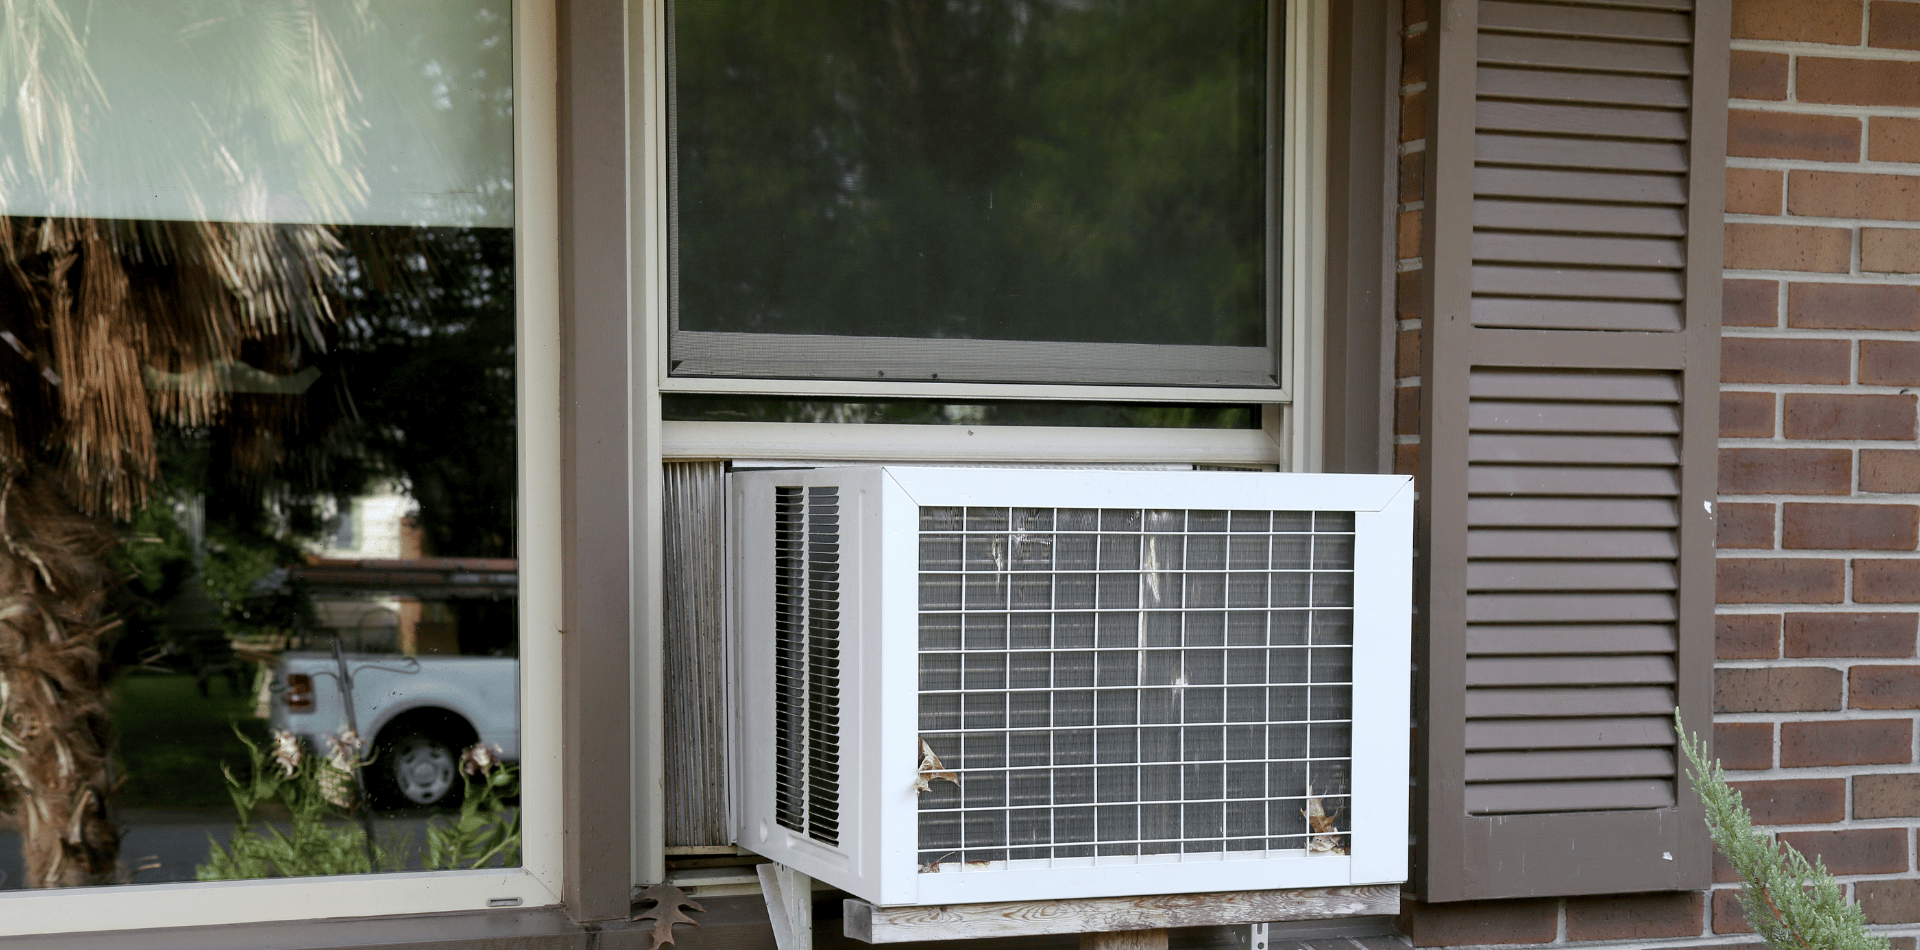 A window air conditioner